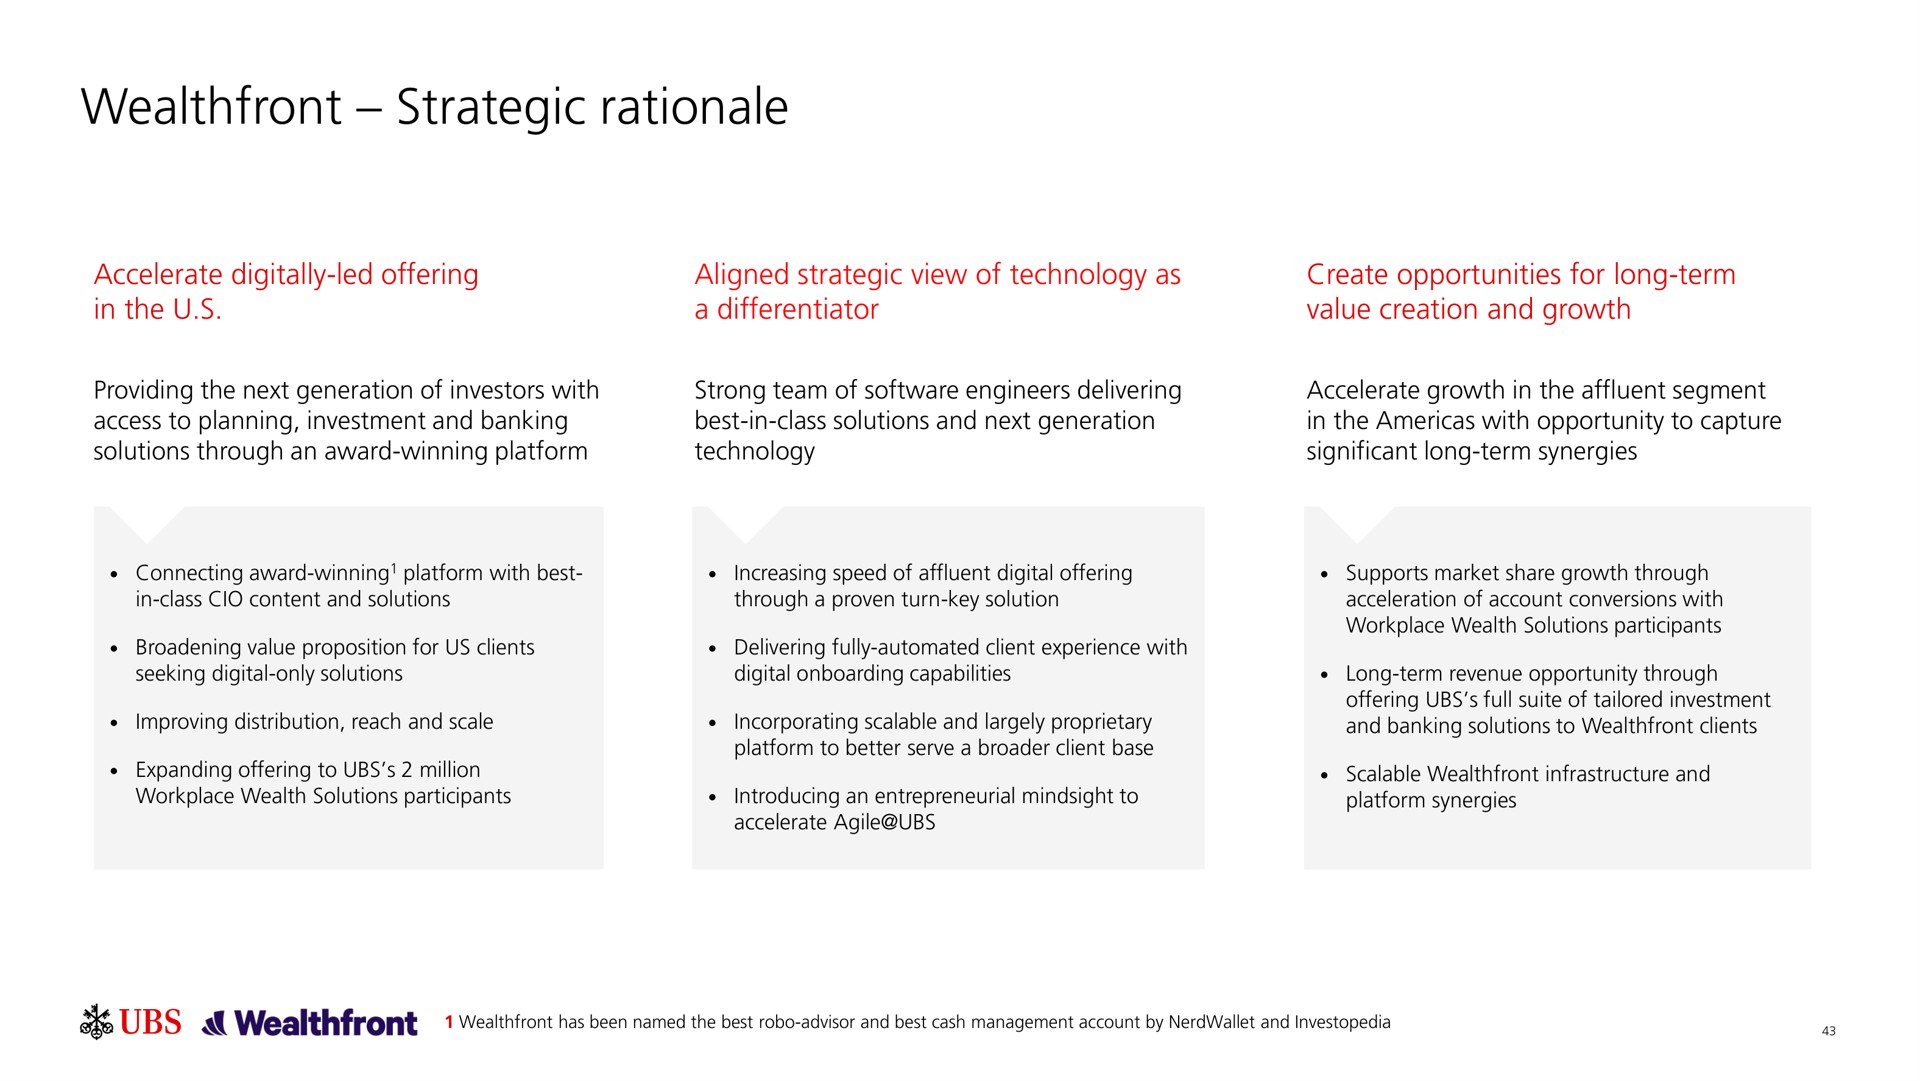 strategic rationale | UBS